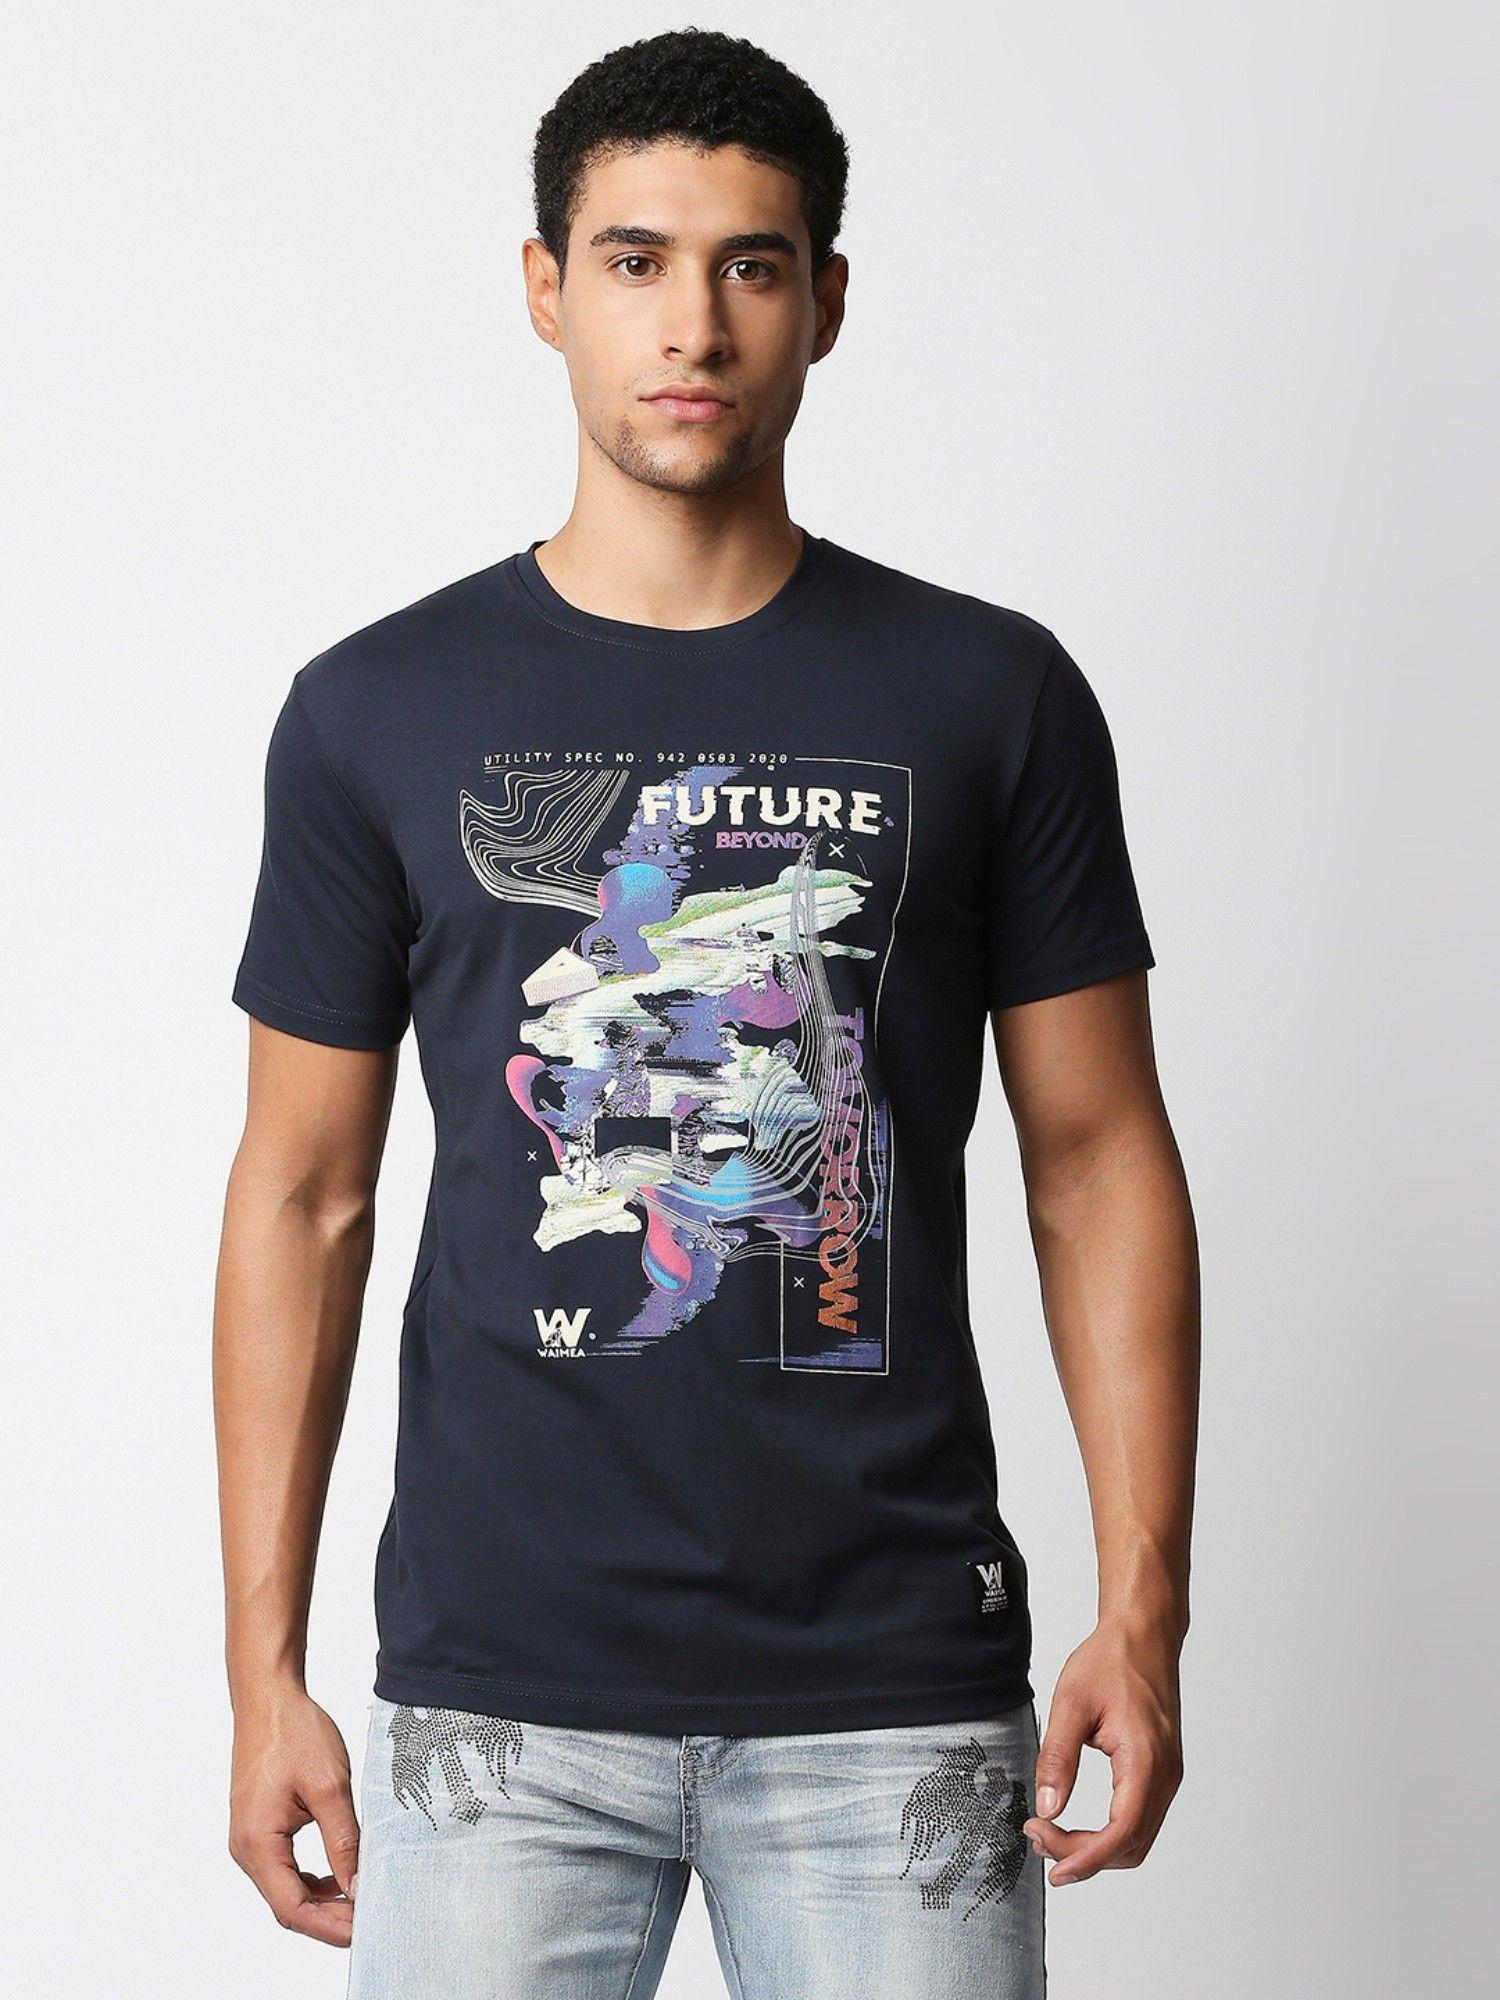 mens navy blue slim fit t-shirt